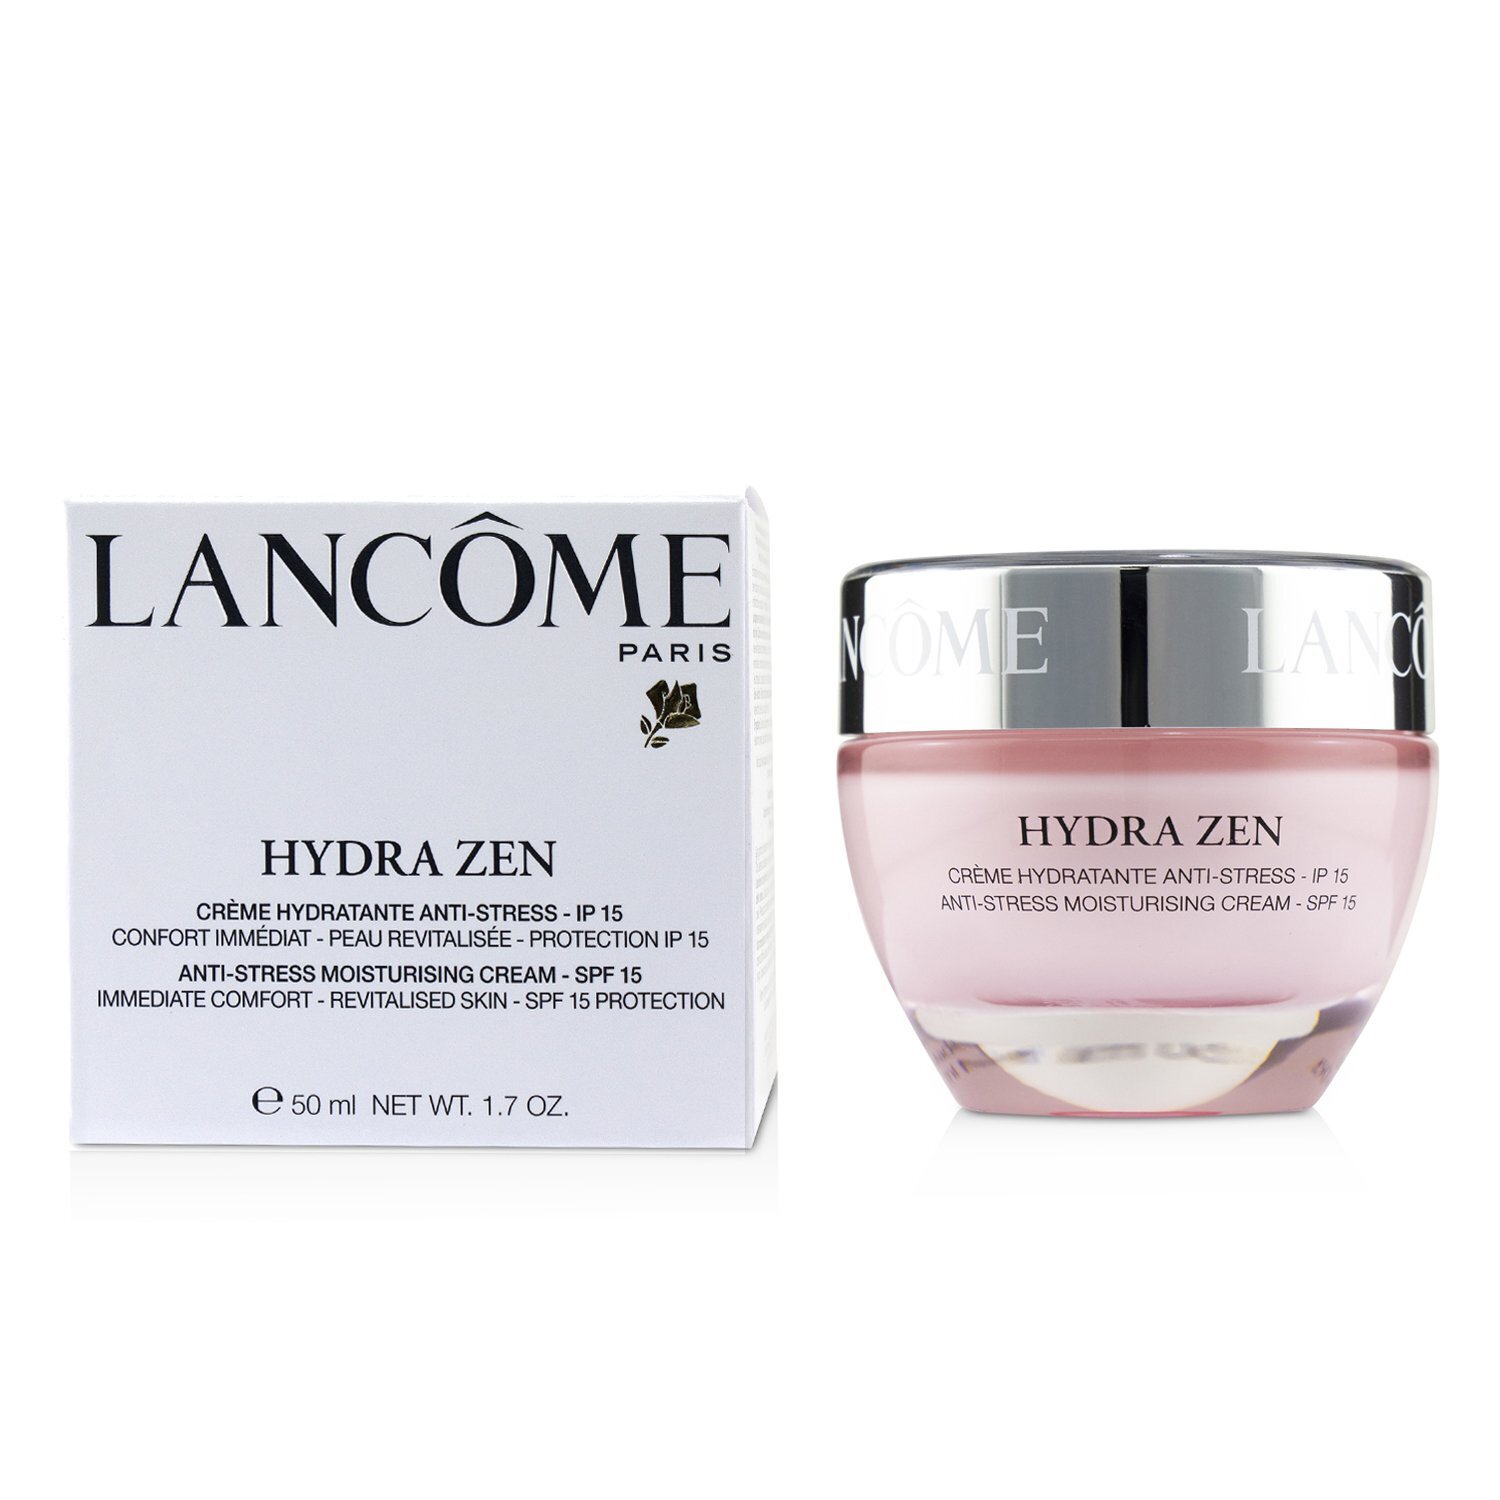 Lancome Hydra Zen Anti-Stress Moisturising Cream SPF15 - All Skin Types 50ml/1.7oz